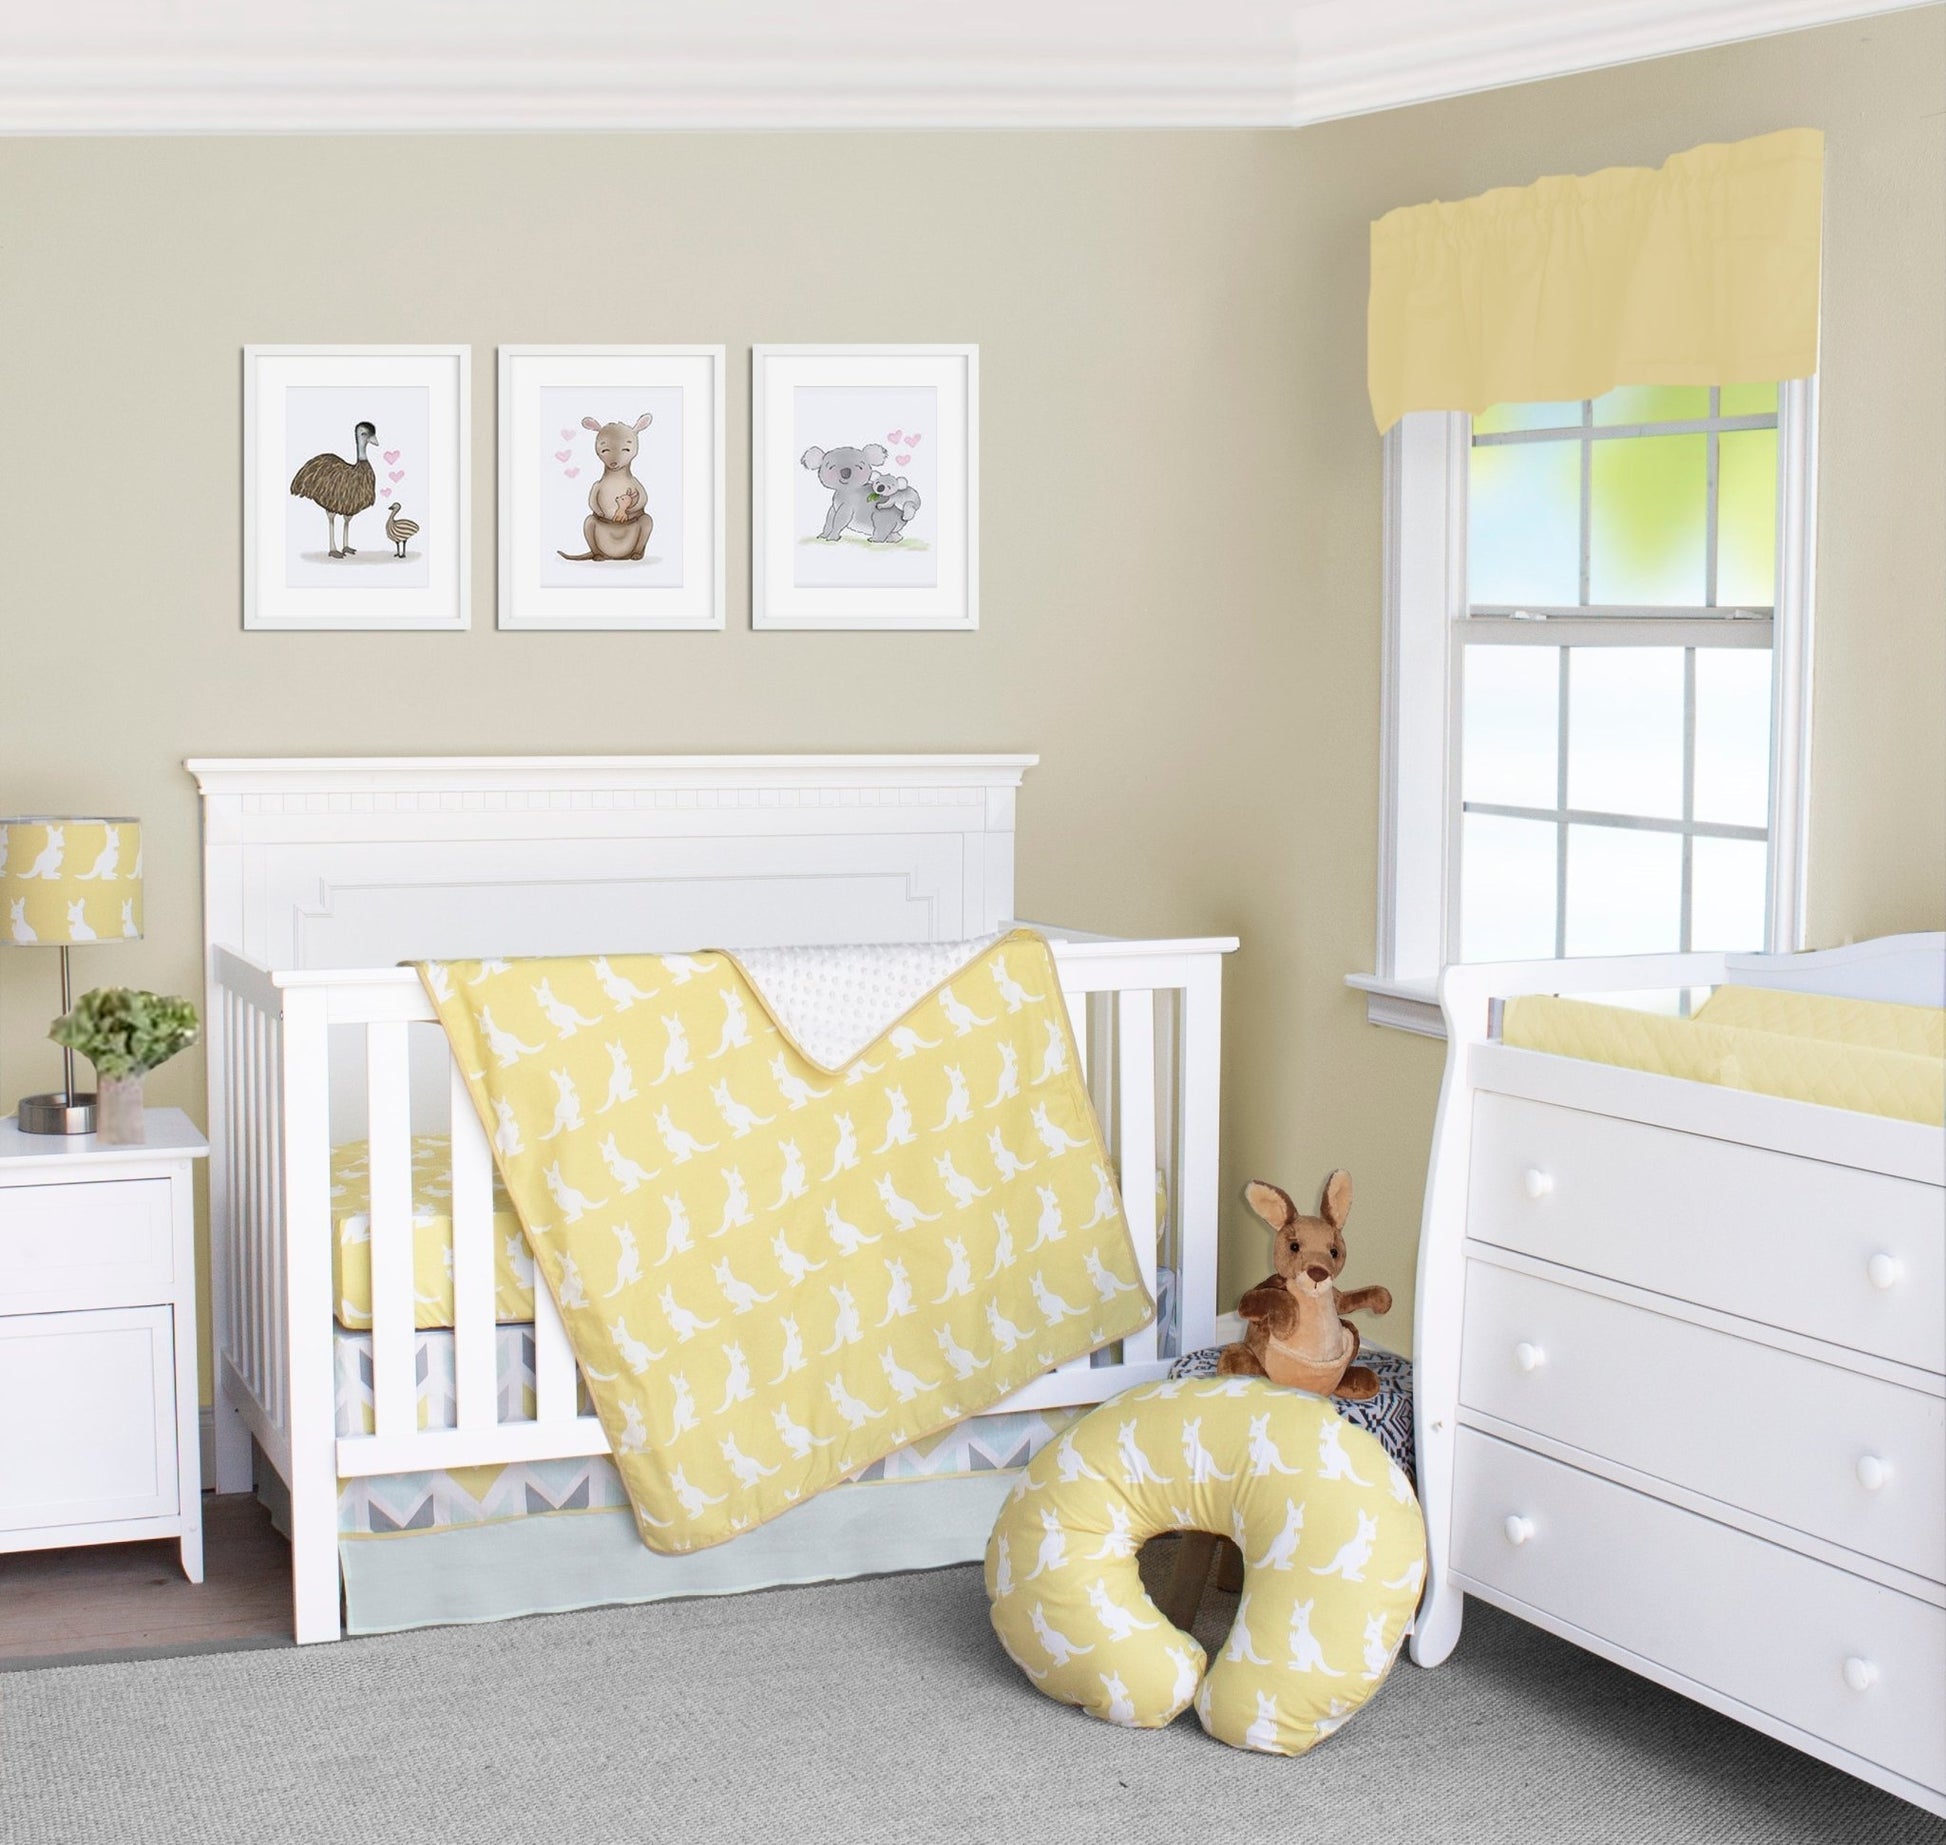 HoneyDew Kangaroo 3 Piece Crib Bedding Set - New Arrivals Inc